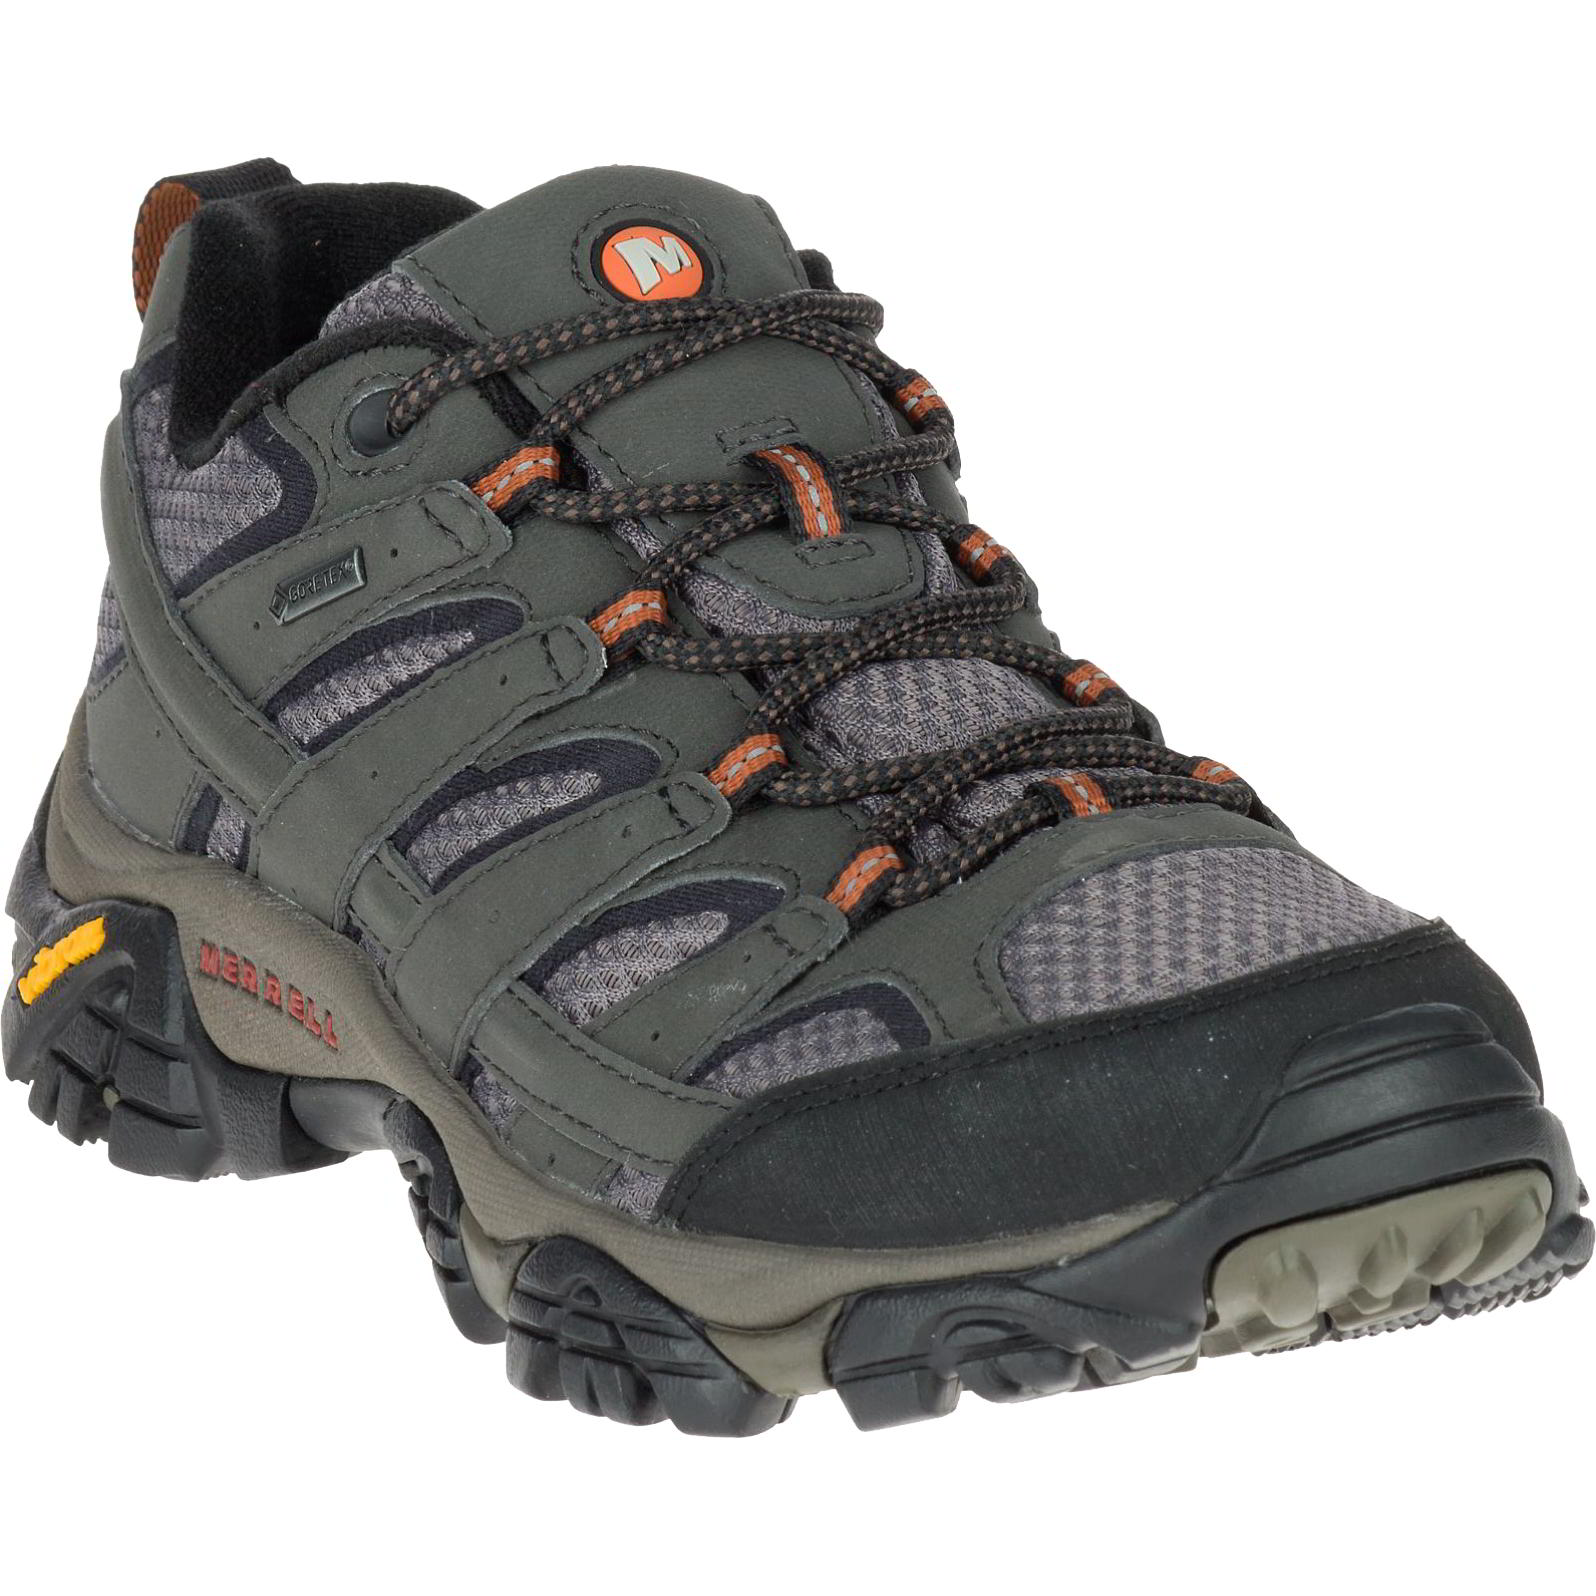 Merrell Mens Moab 2 GTX Waterproof Walking Hiking Shoes Trainers - UK 8.5